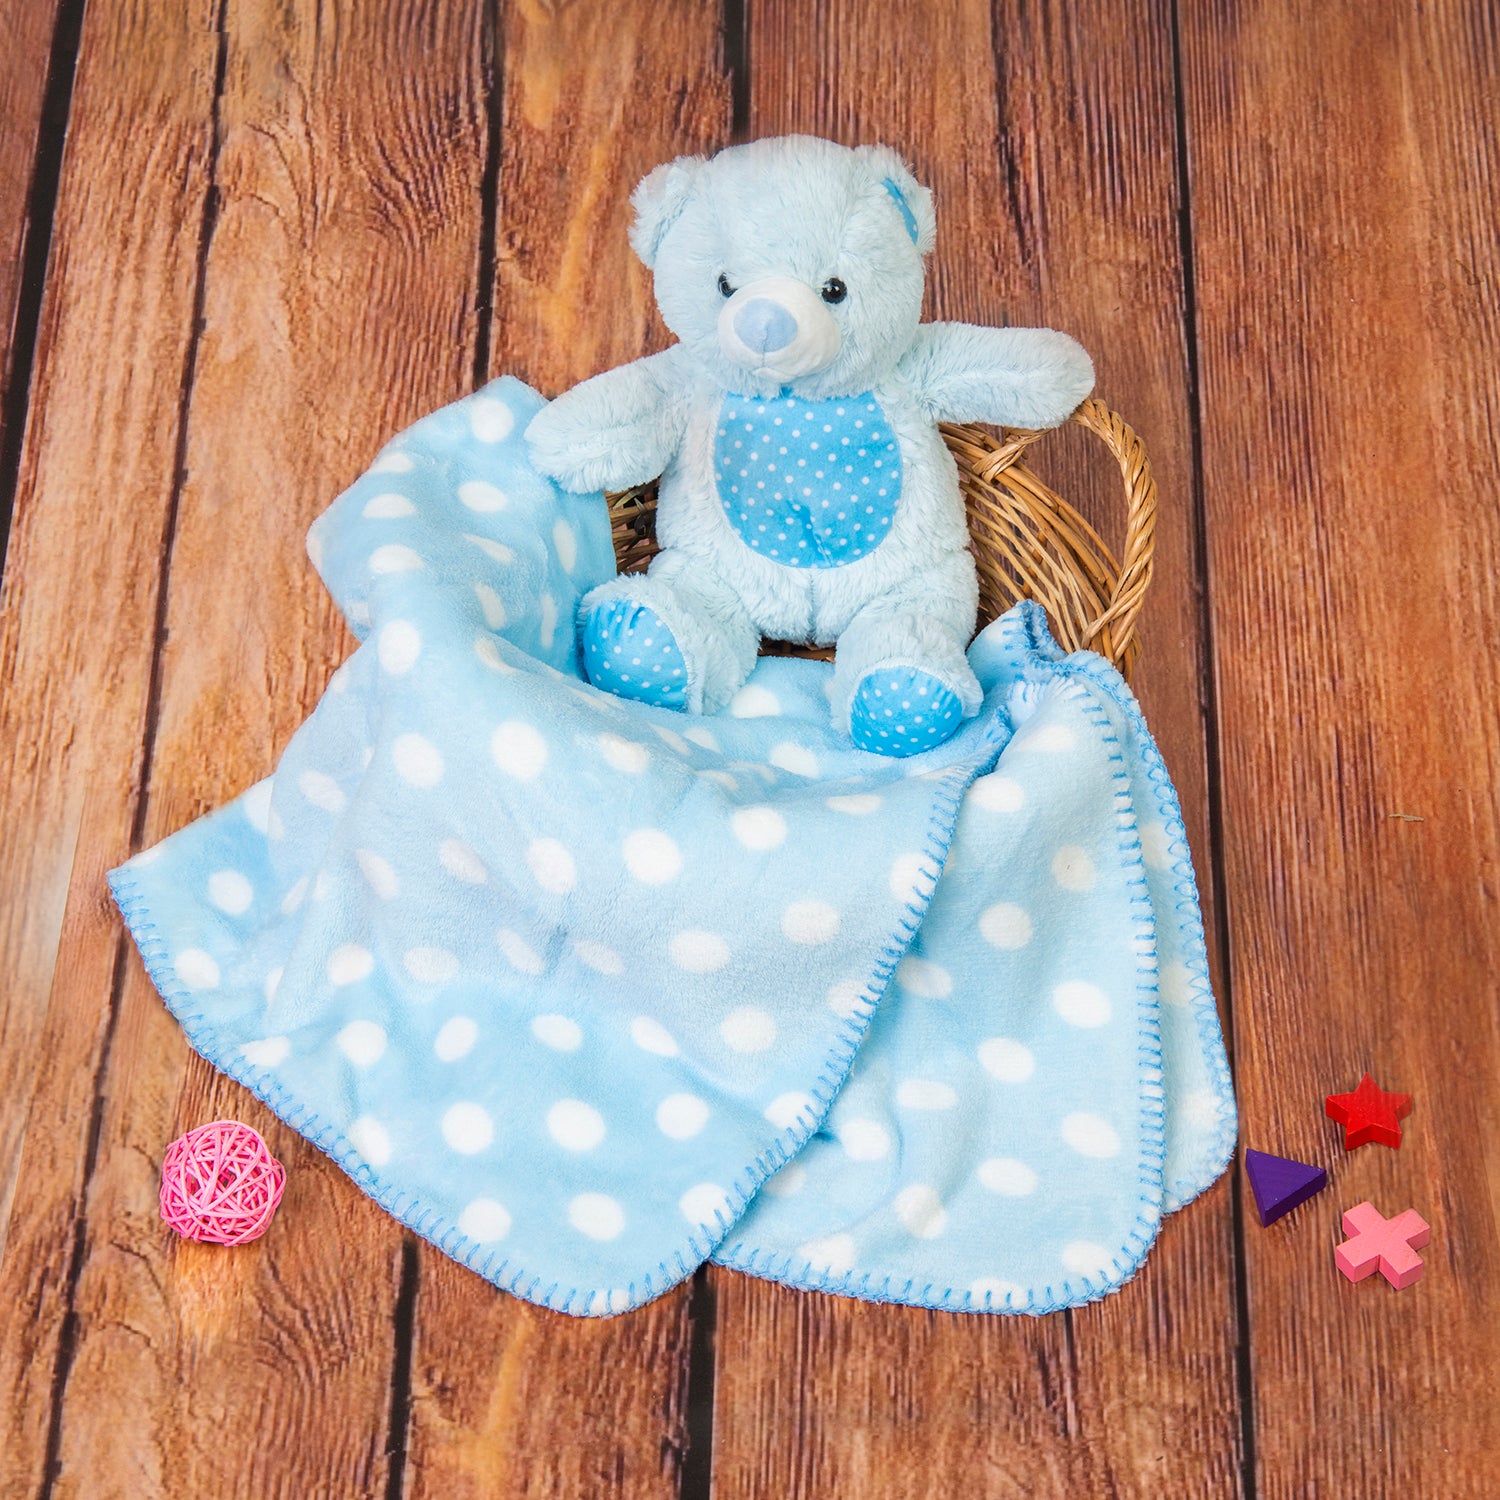 Bear Soft Cozy Plush Toy Blanket Blue - Baby Moo